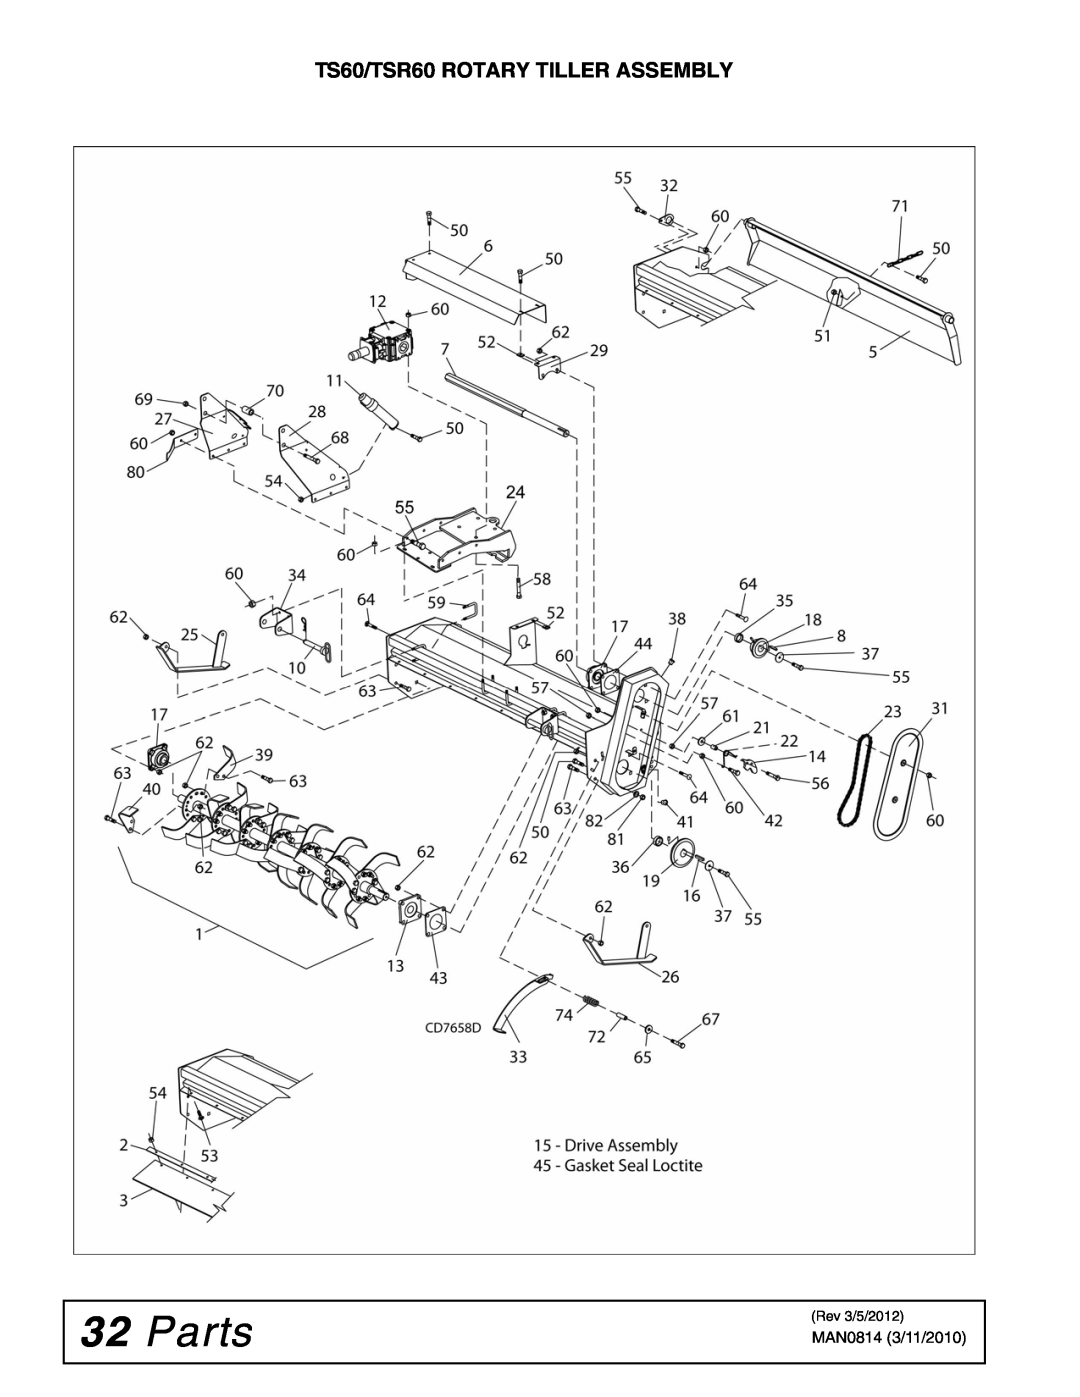 Woods Equipment TS52, TS44 manual Parts, TS60/TSR60 ROTARY TILLER ASSEMBLY 